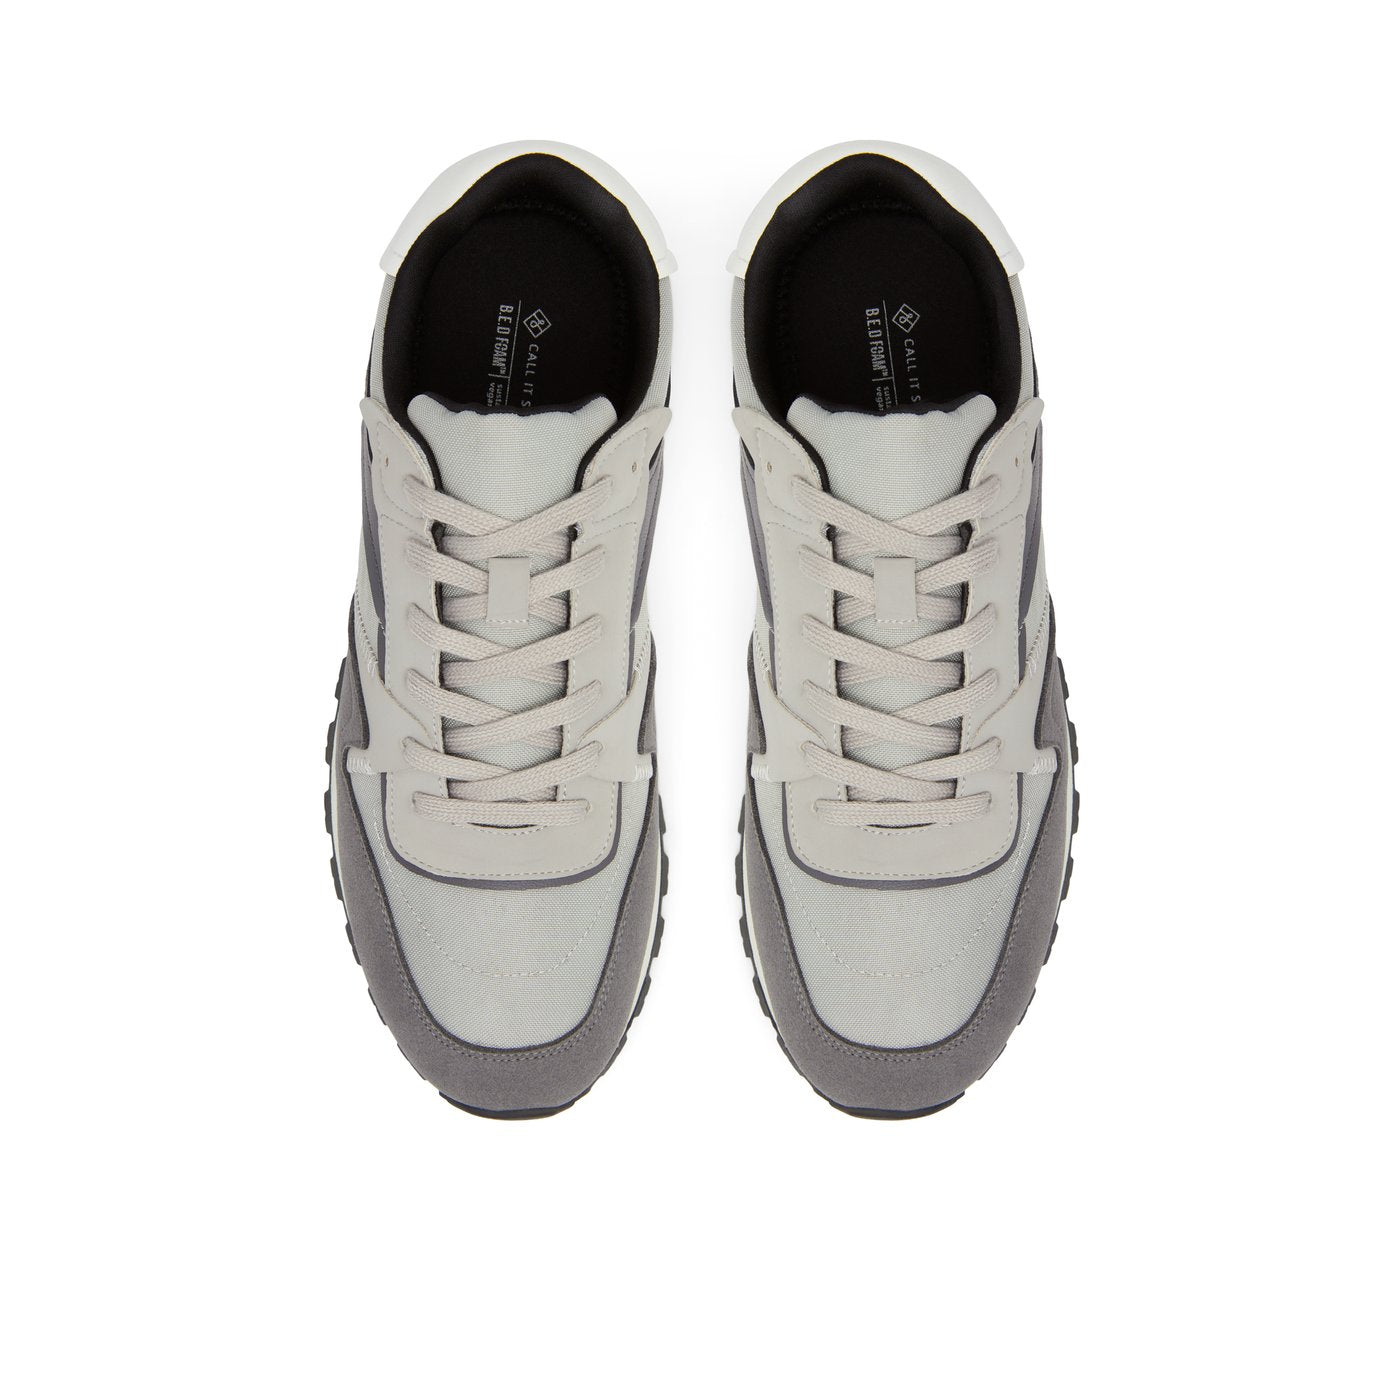 Velox Men Shoes - Medium Grey - CALL IT SPRING KSA